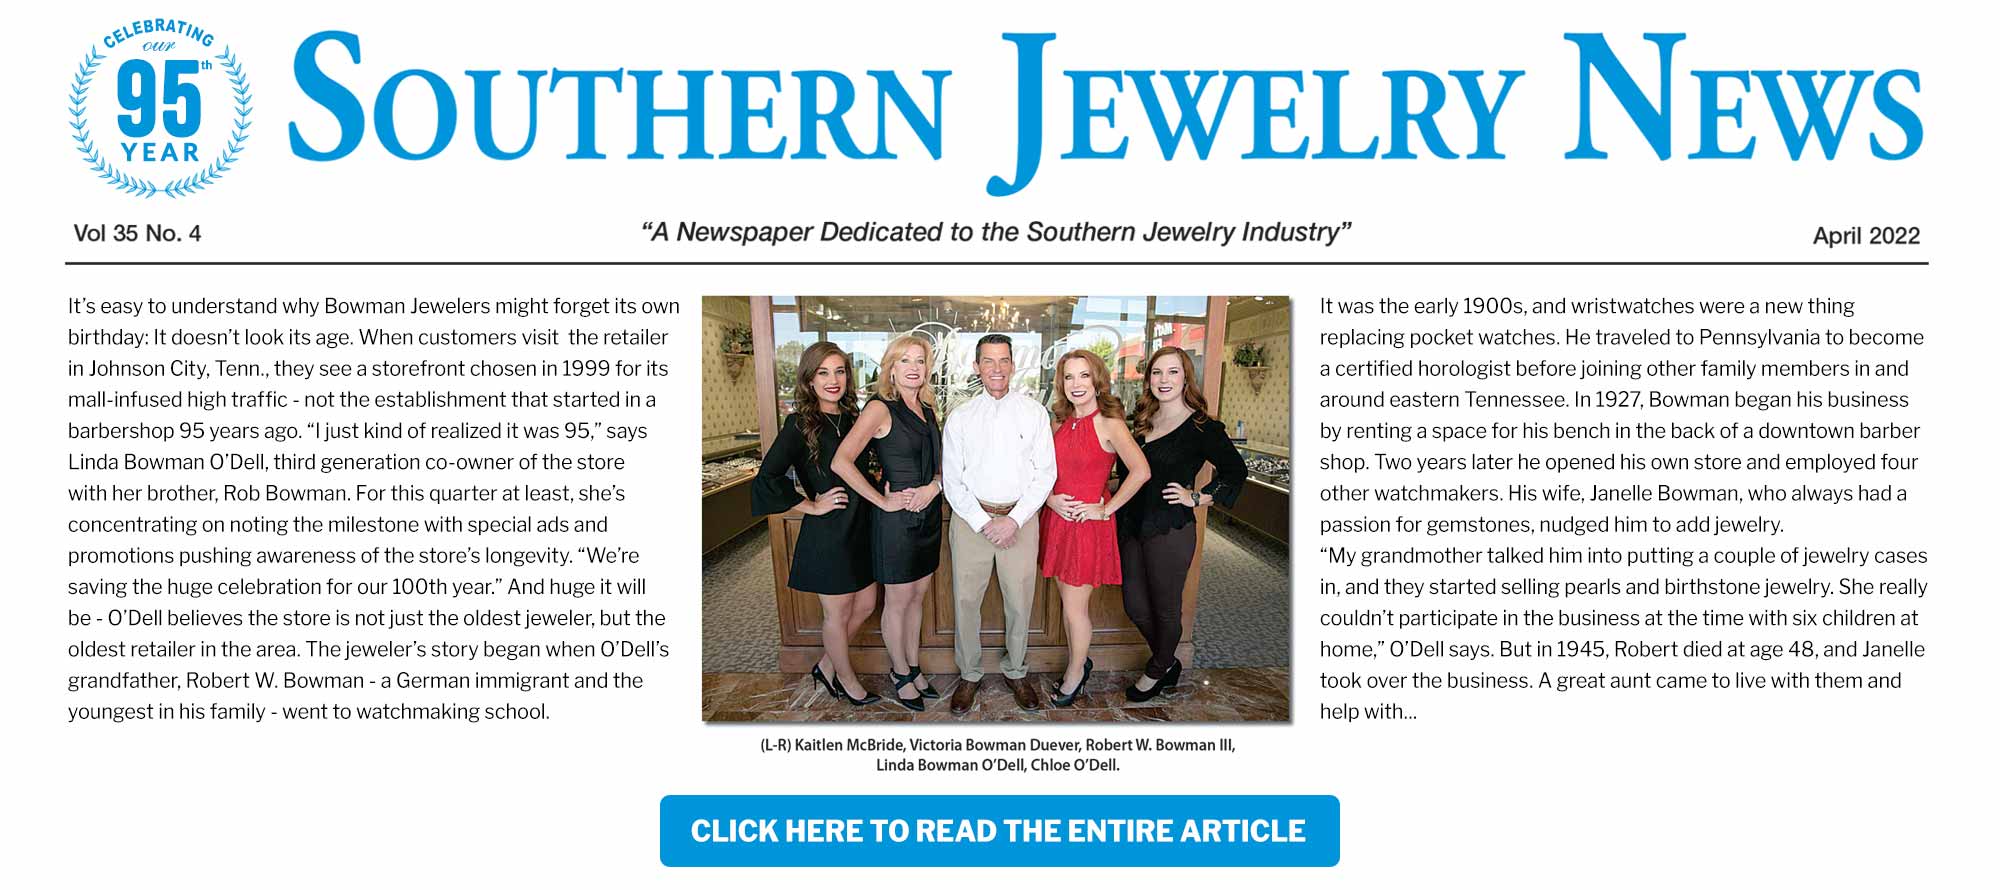 Bowman Jewelers in Southern Jewelry News Magazine